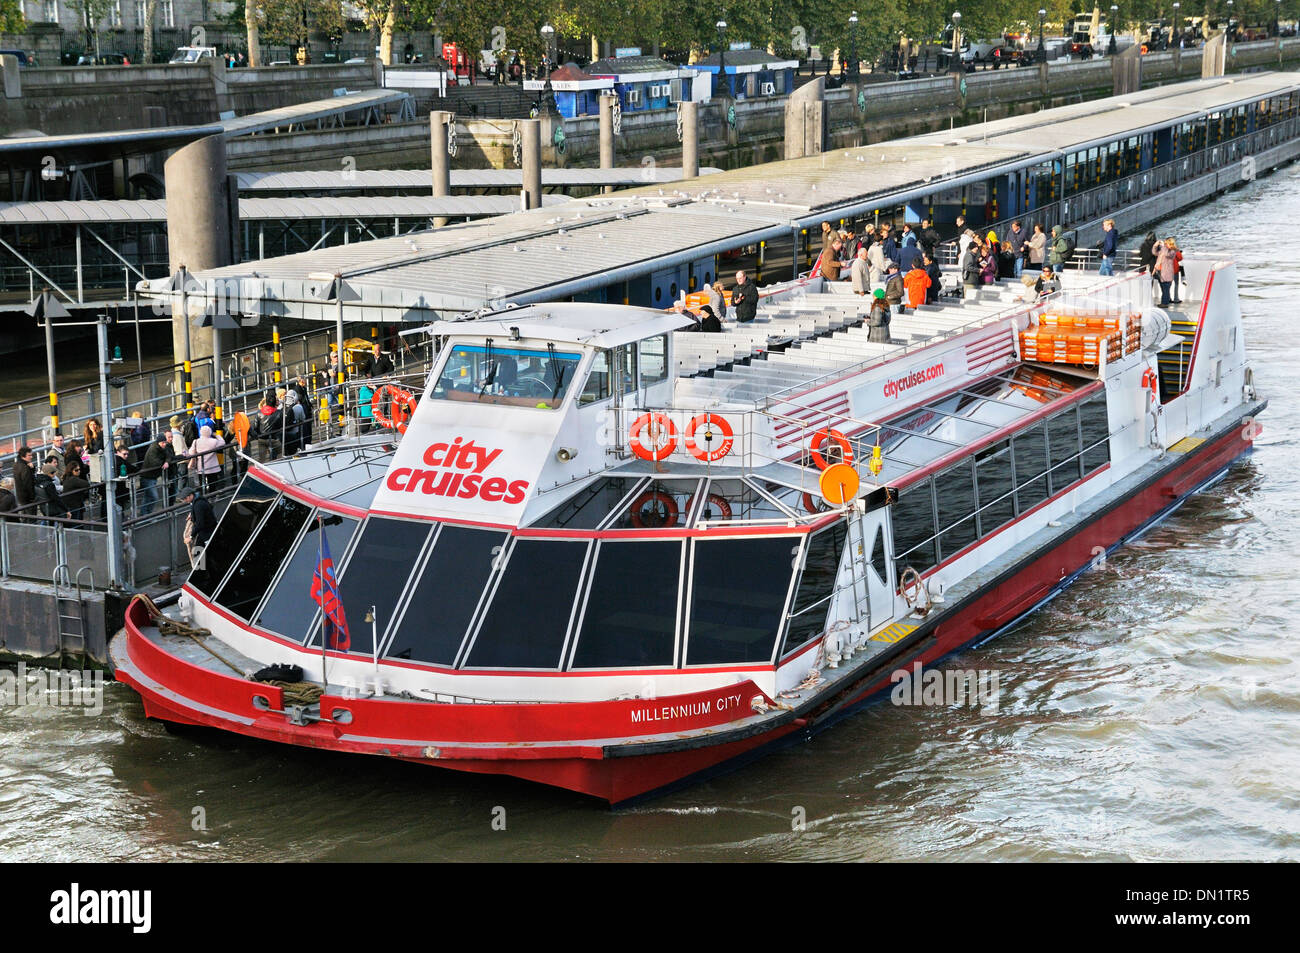 City Cruises boat on the River Thames, Victoria Embankment, London, England, UK Stock Photo